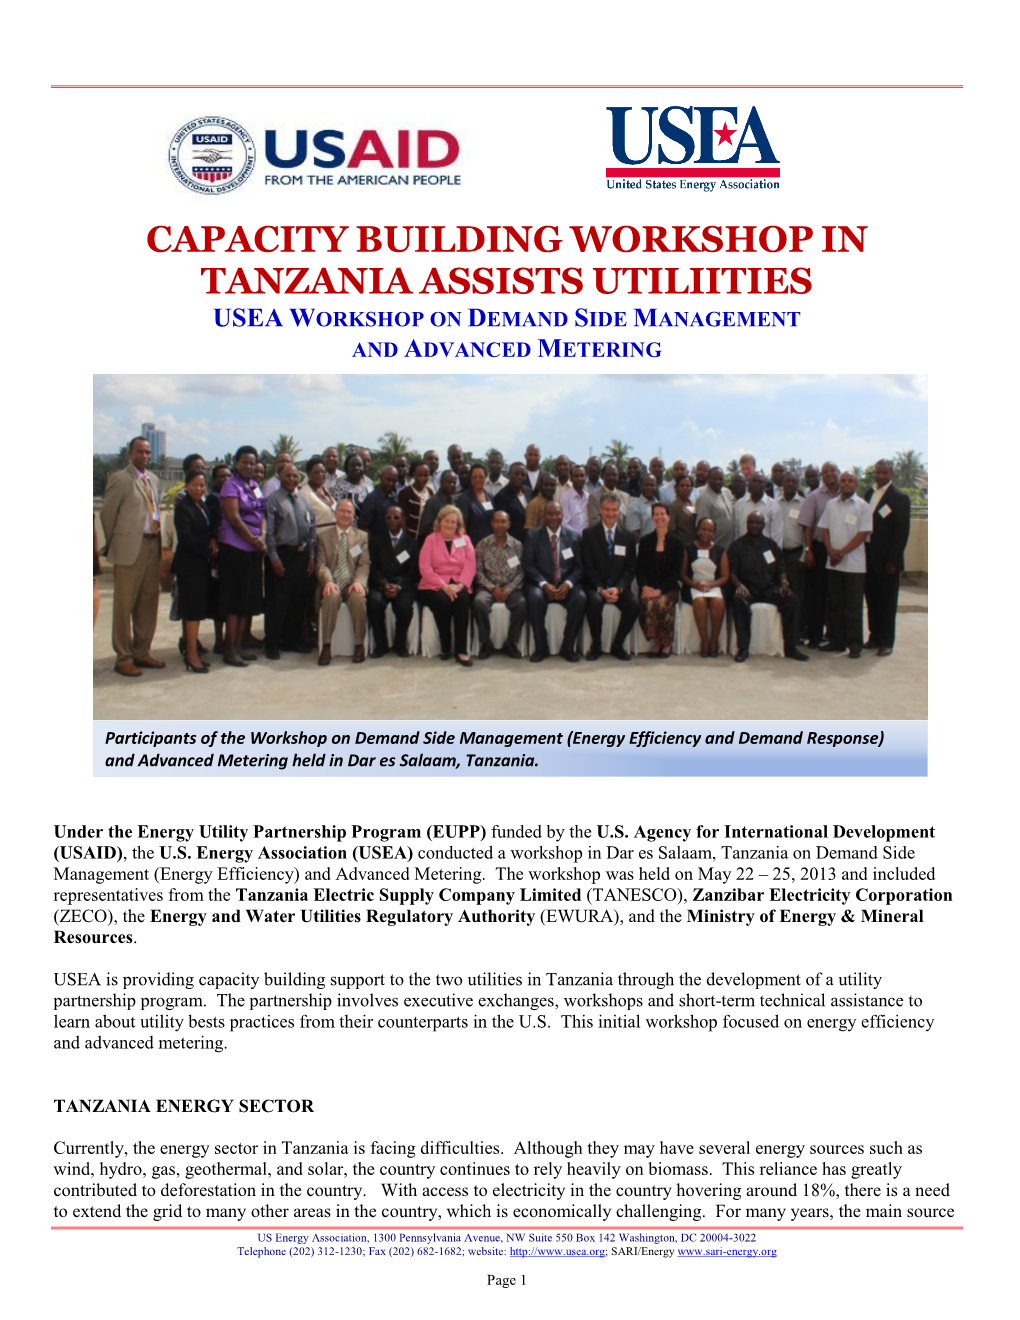 Tanzania DSM and Advanced Metering Workshop May 2013.Pdf